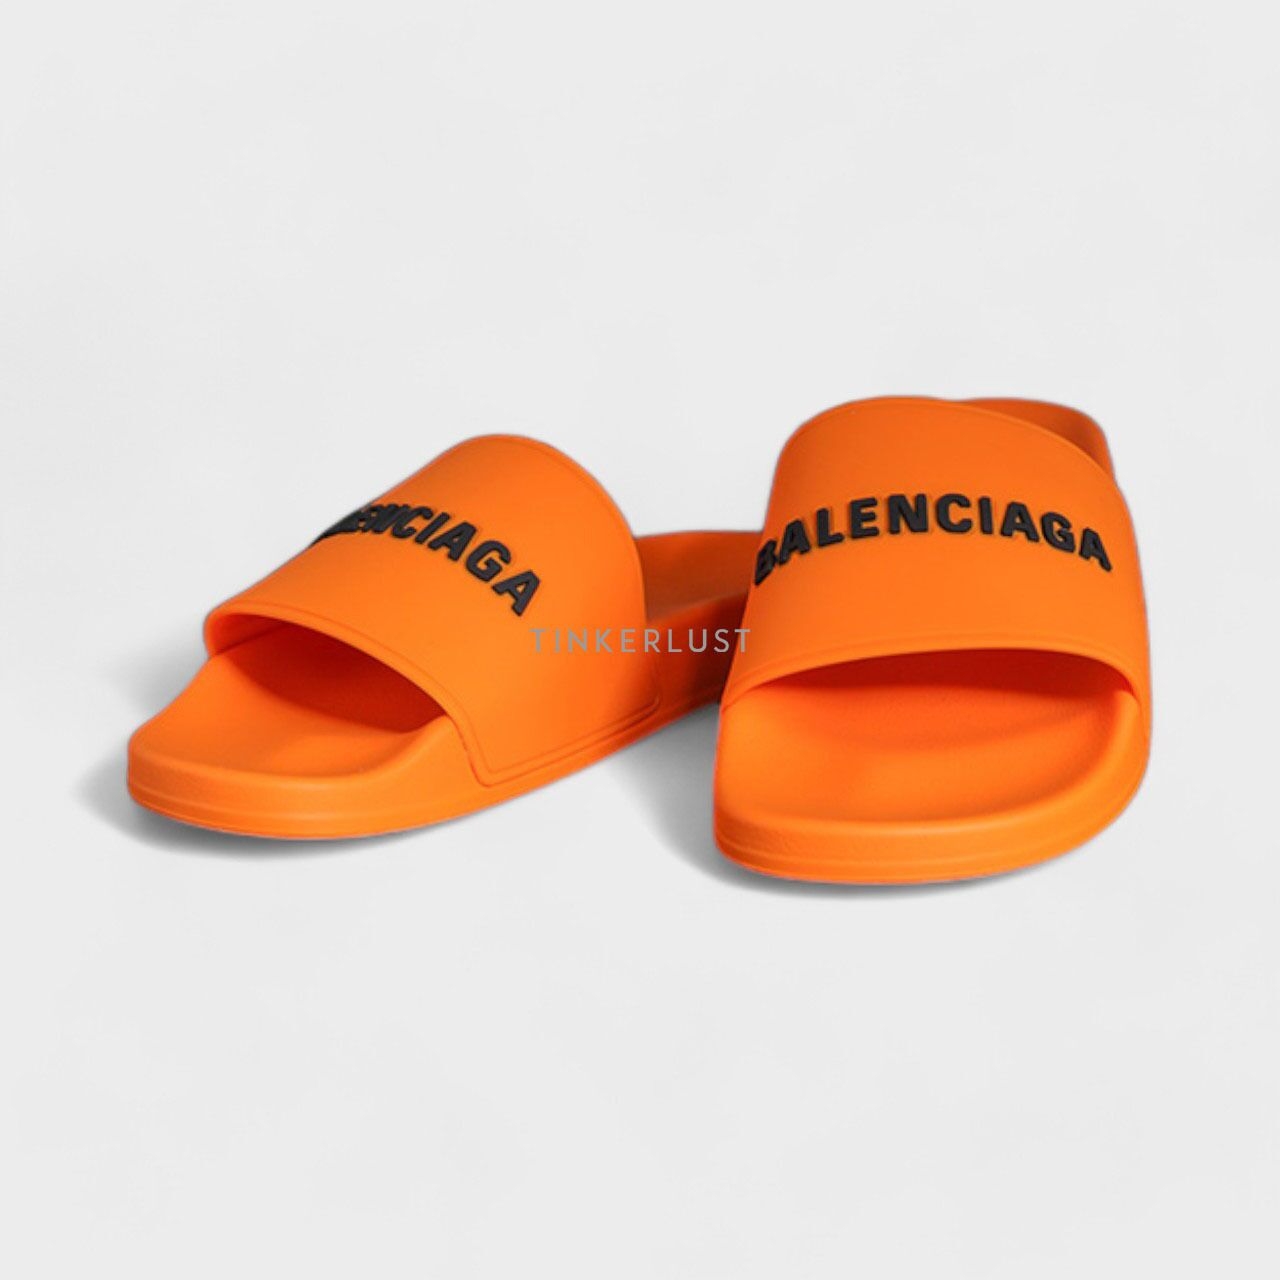 Balenciaga Men Logo Slides in Orange/Black Sandals